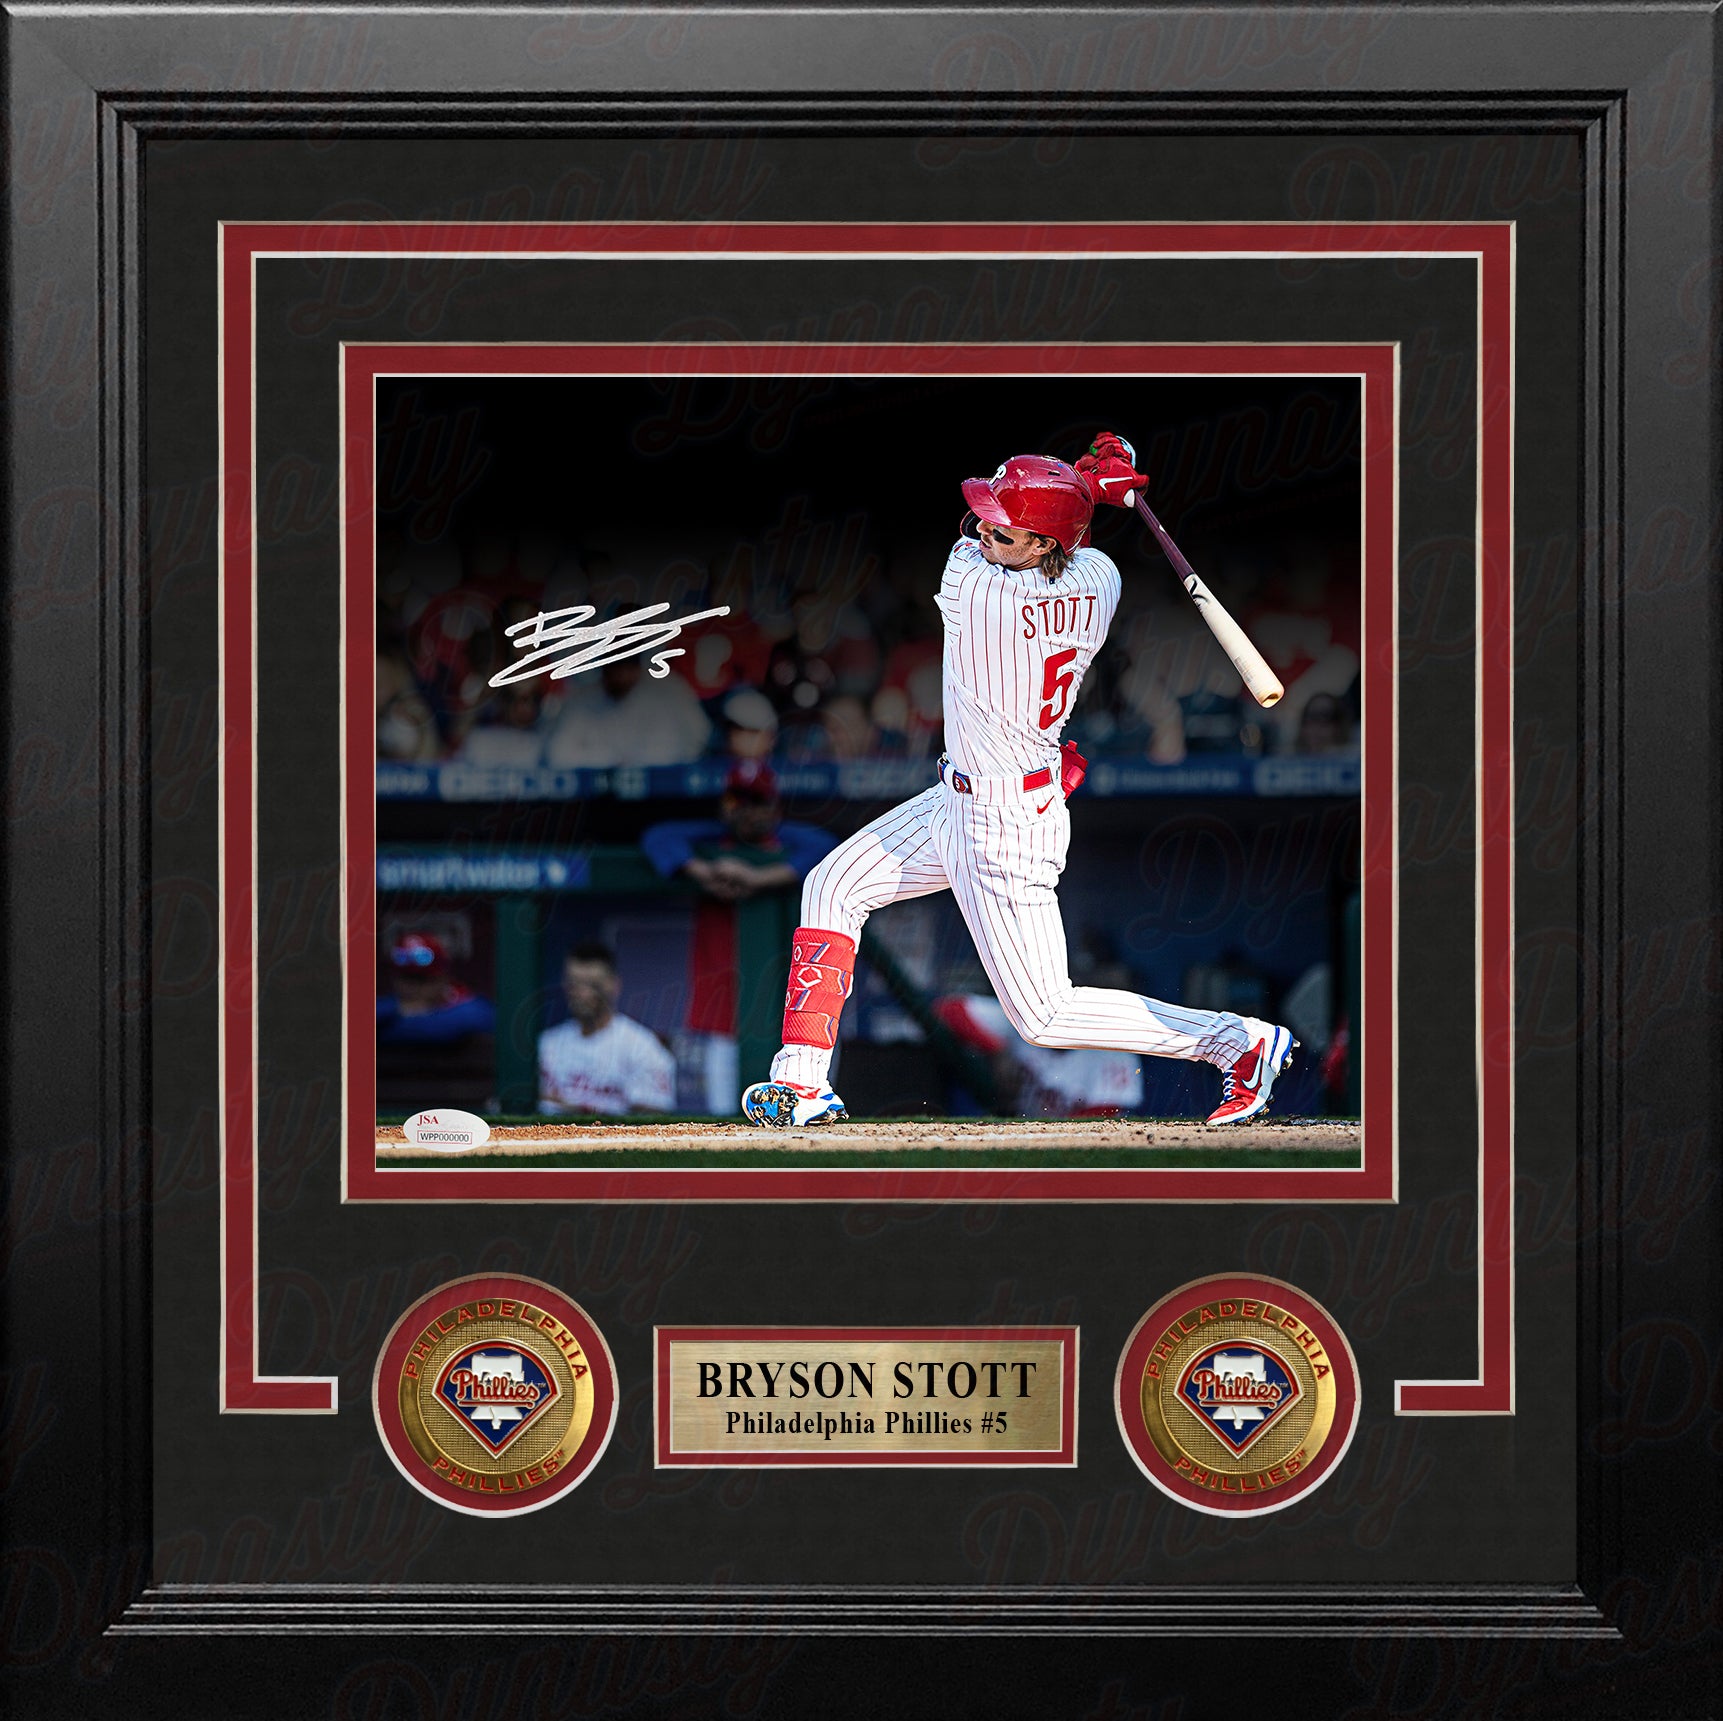 Bryson Stott Philadelphia Phillies Autographed Framed First MLB Hit